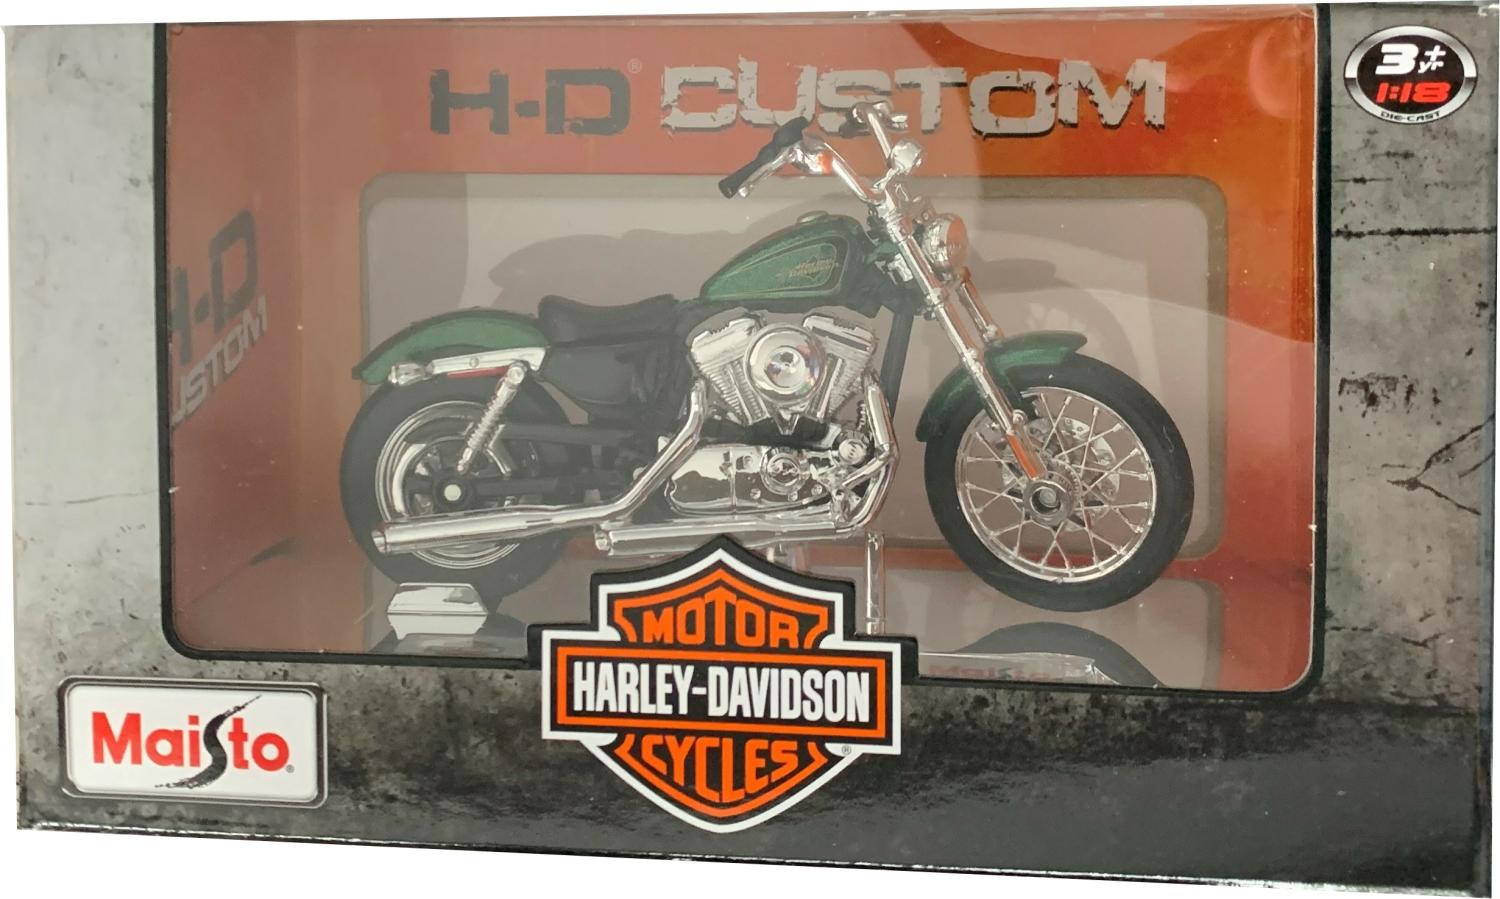 Harley Davidson 2012 XL 1200V Seventy-Two in metallic green 1:18 scale model from Maisto